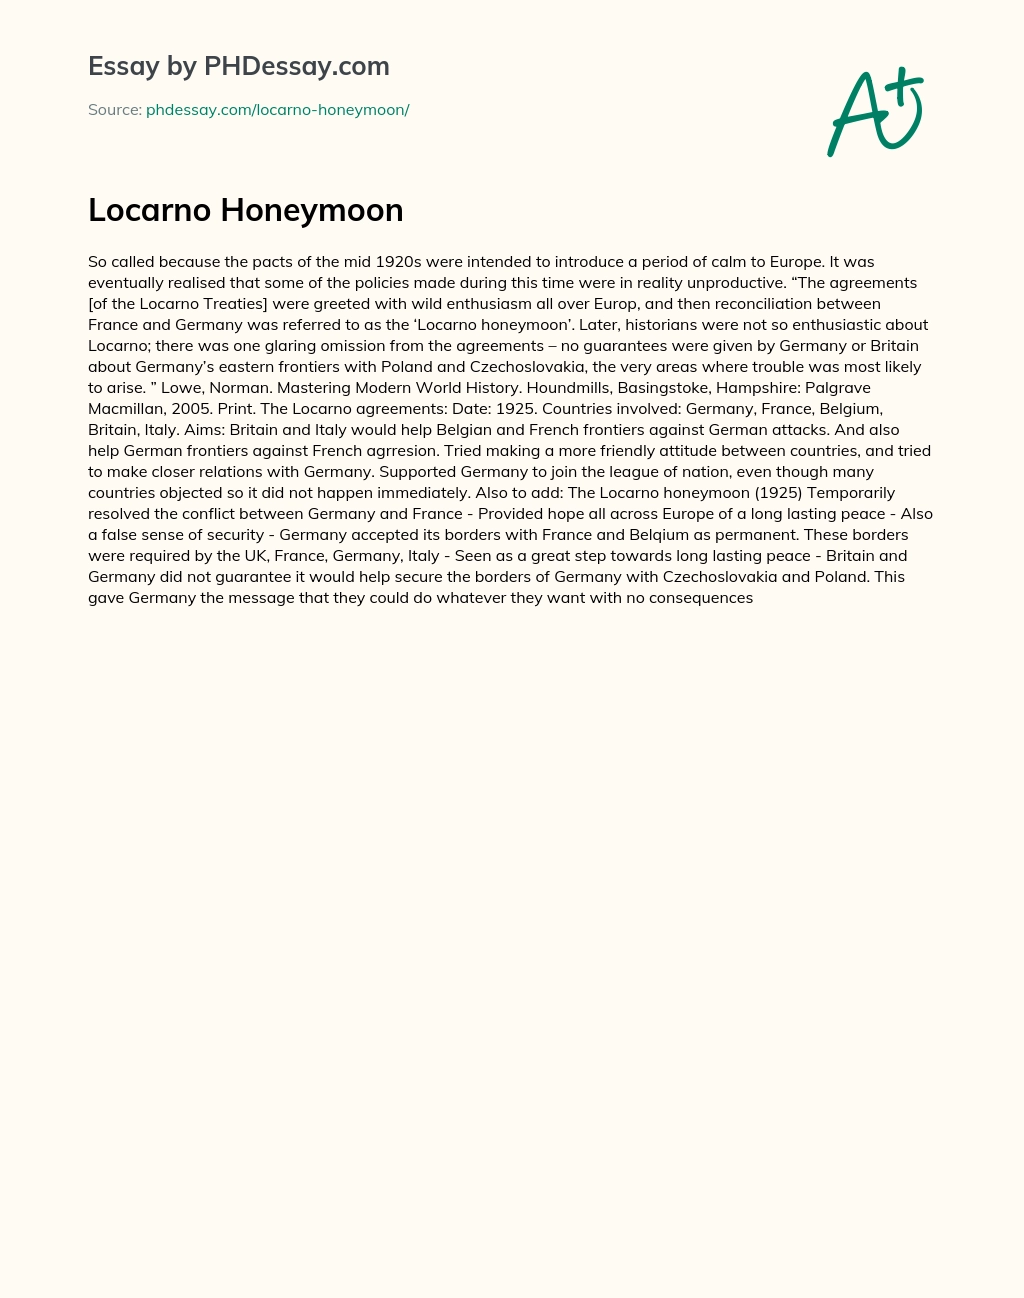 Locarno Honeymoon essay